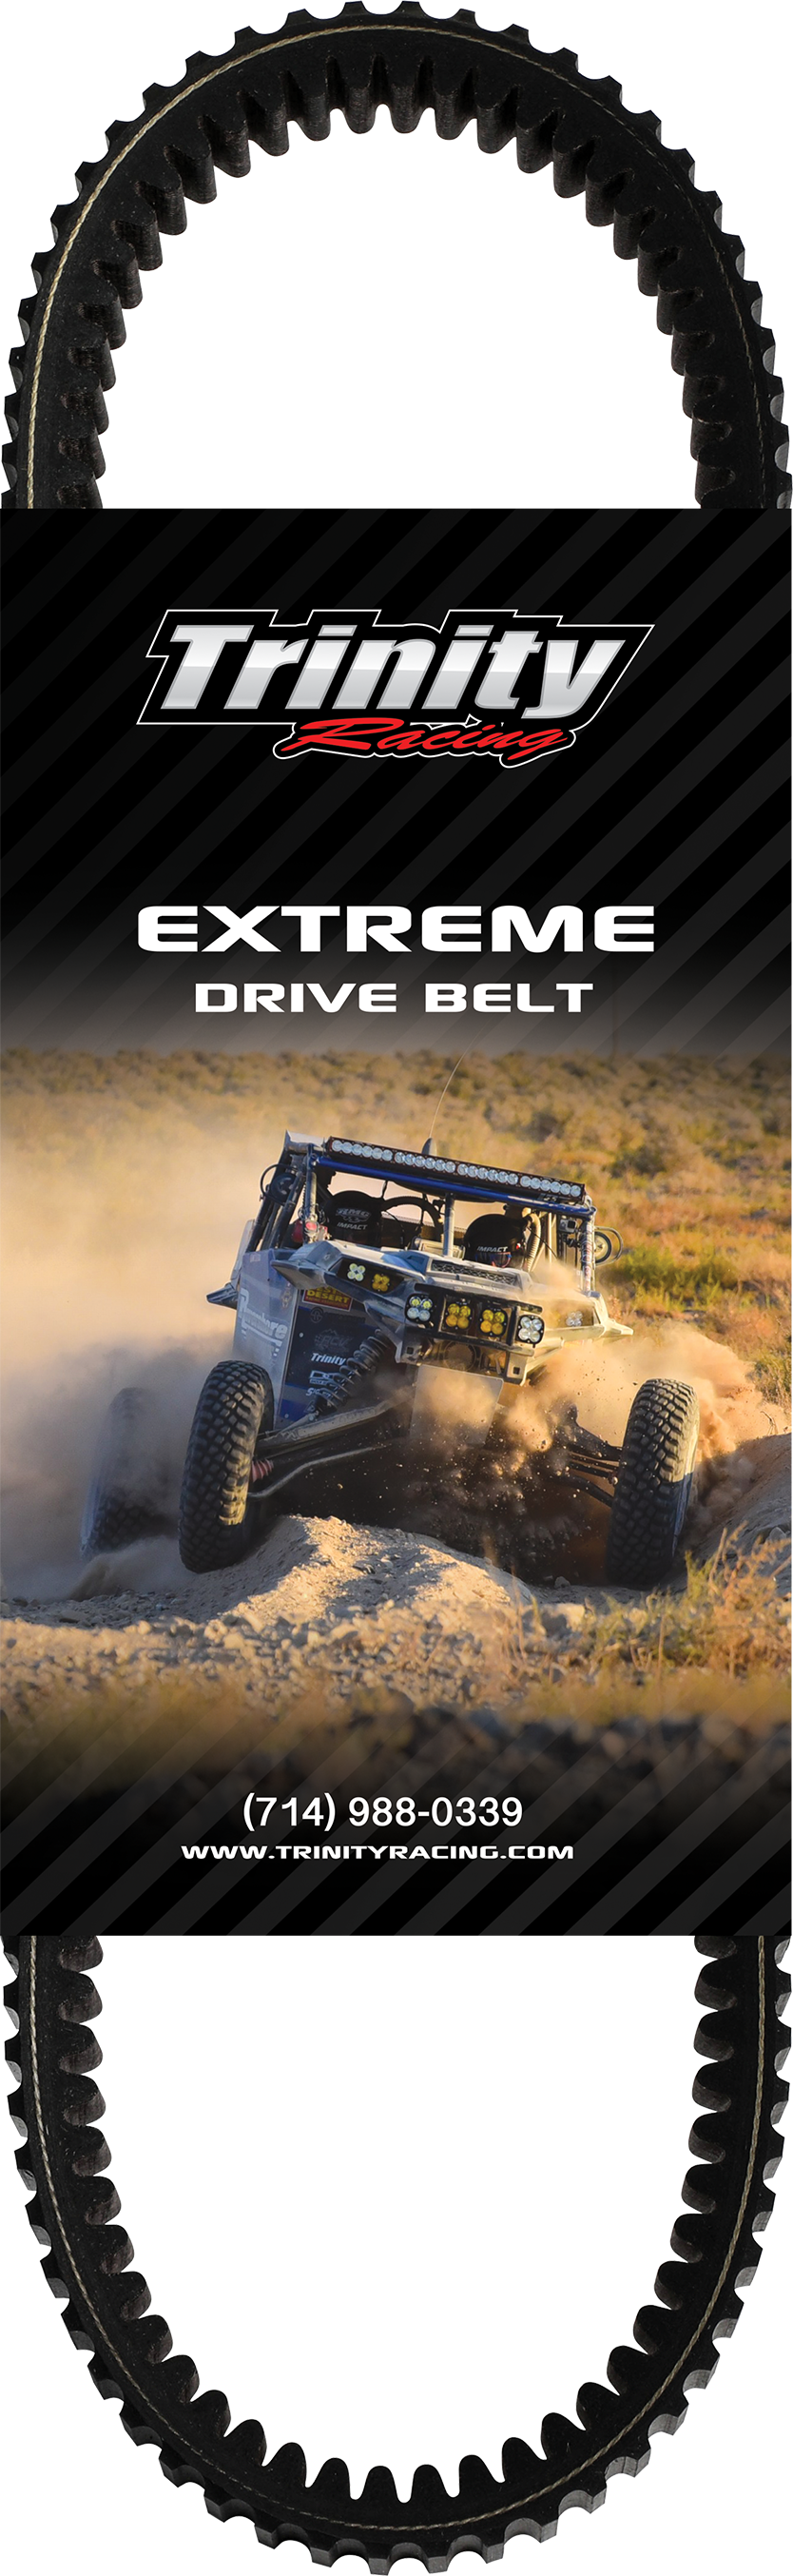 Trinity racing extreme drive belt - rzr xp 1000